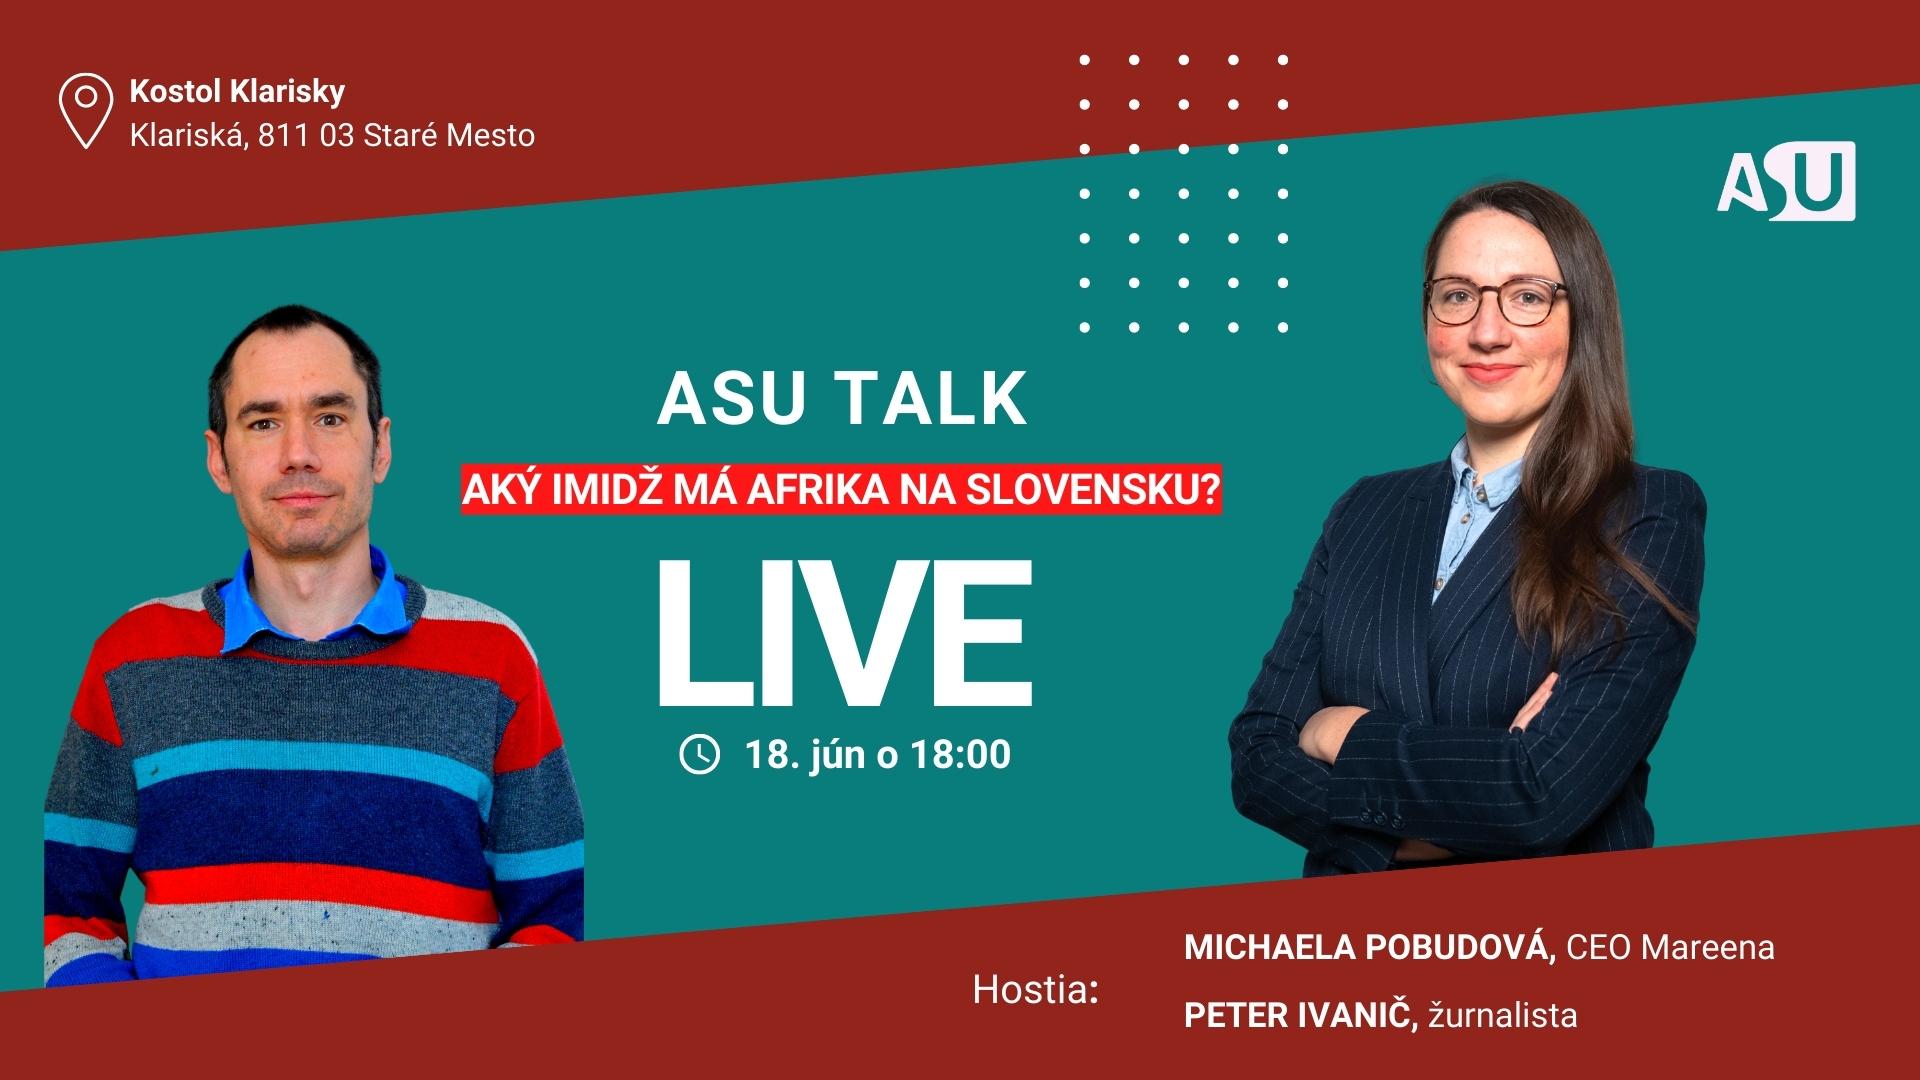 ASU Talk live event